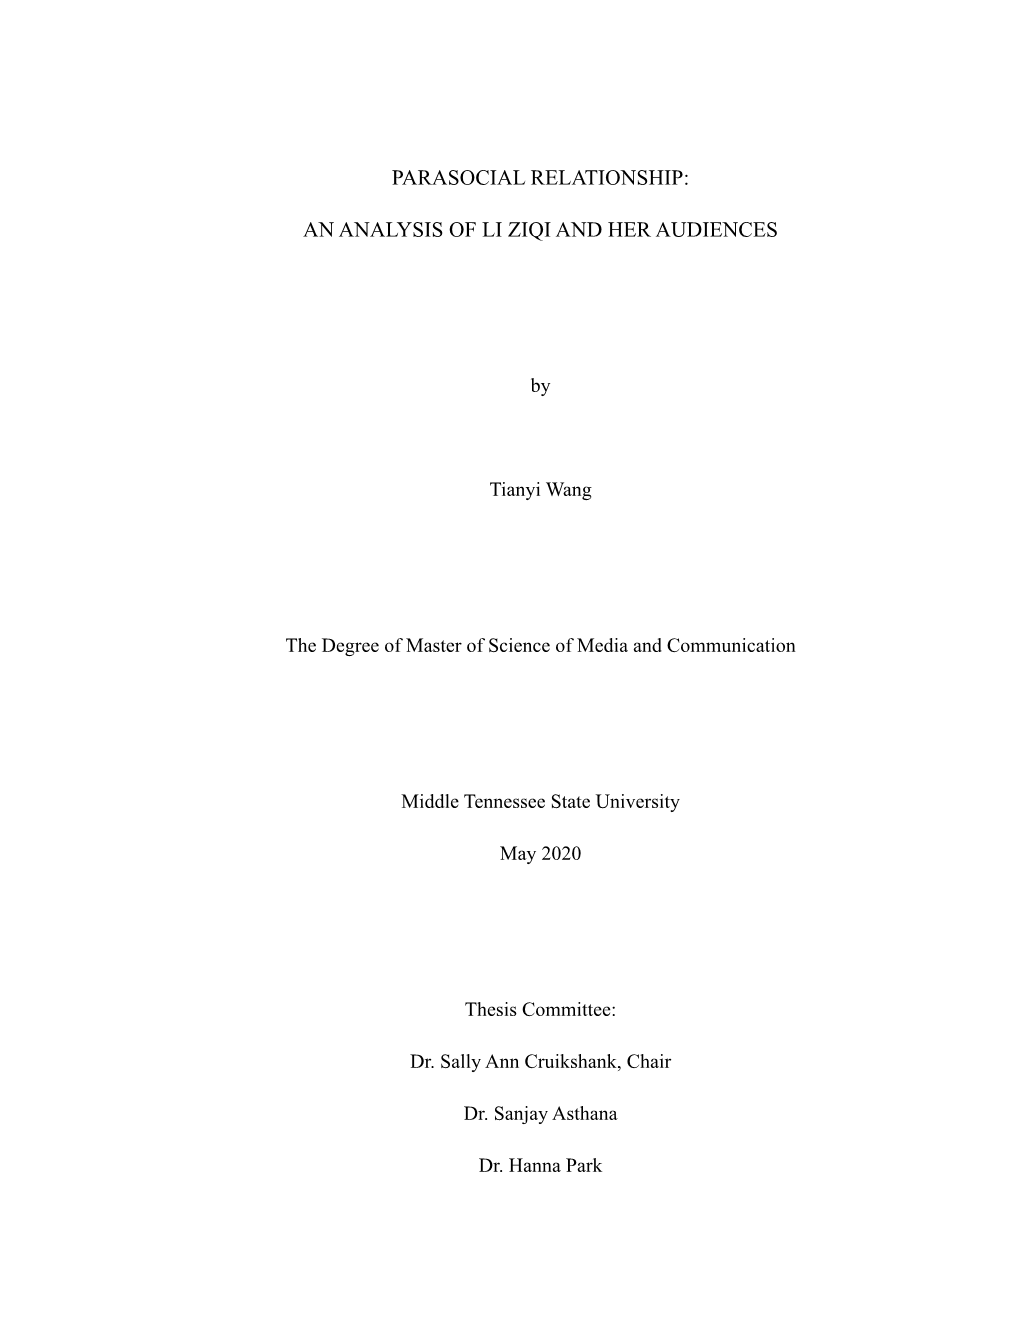 Parasocial Relationship: an Analysis of Li Ziqi and Her